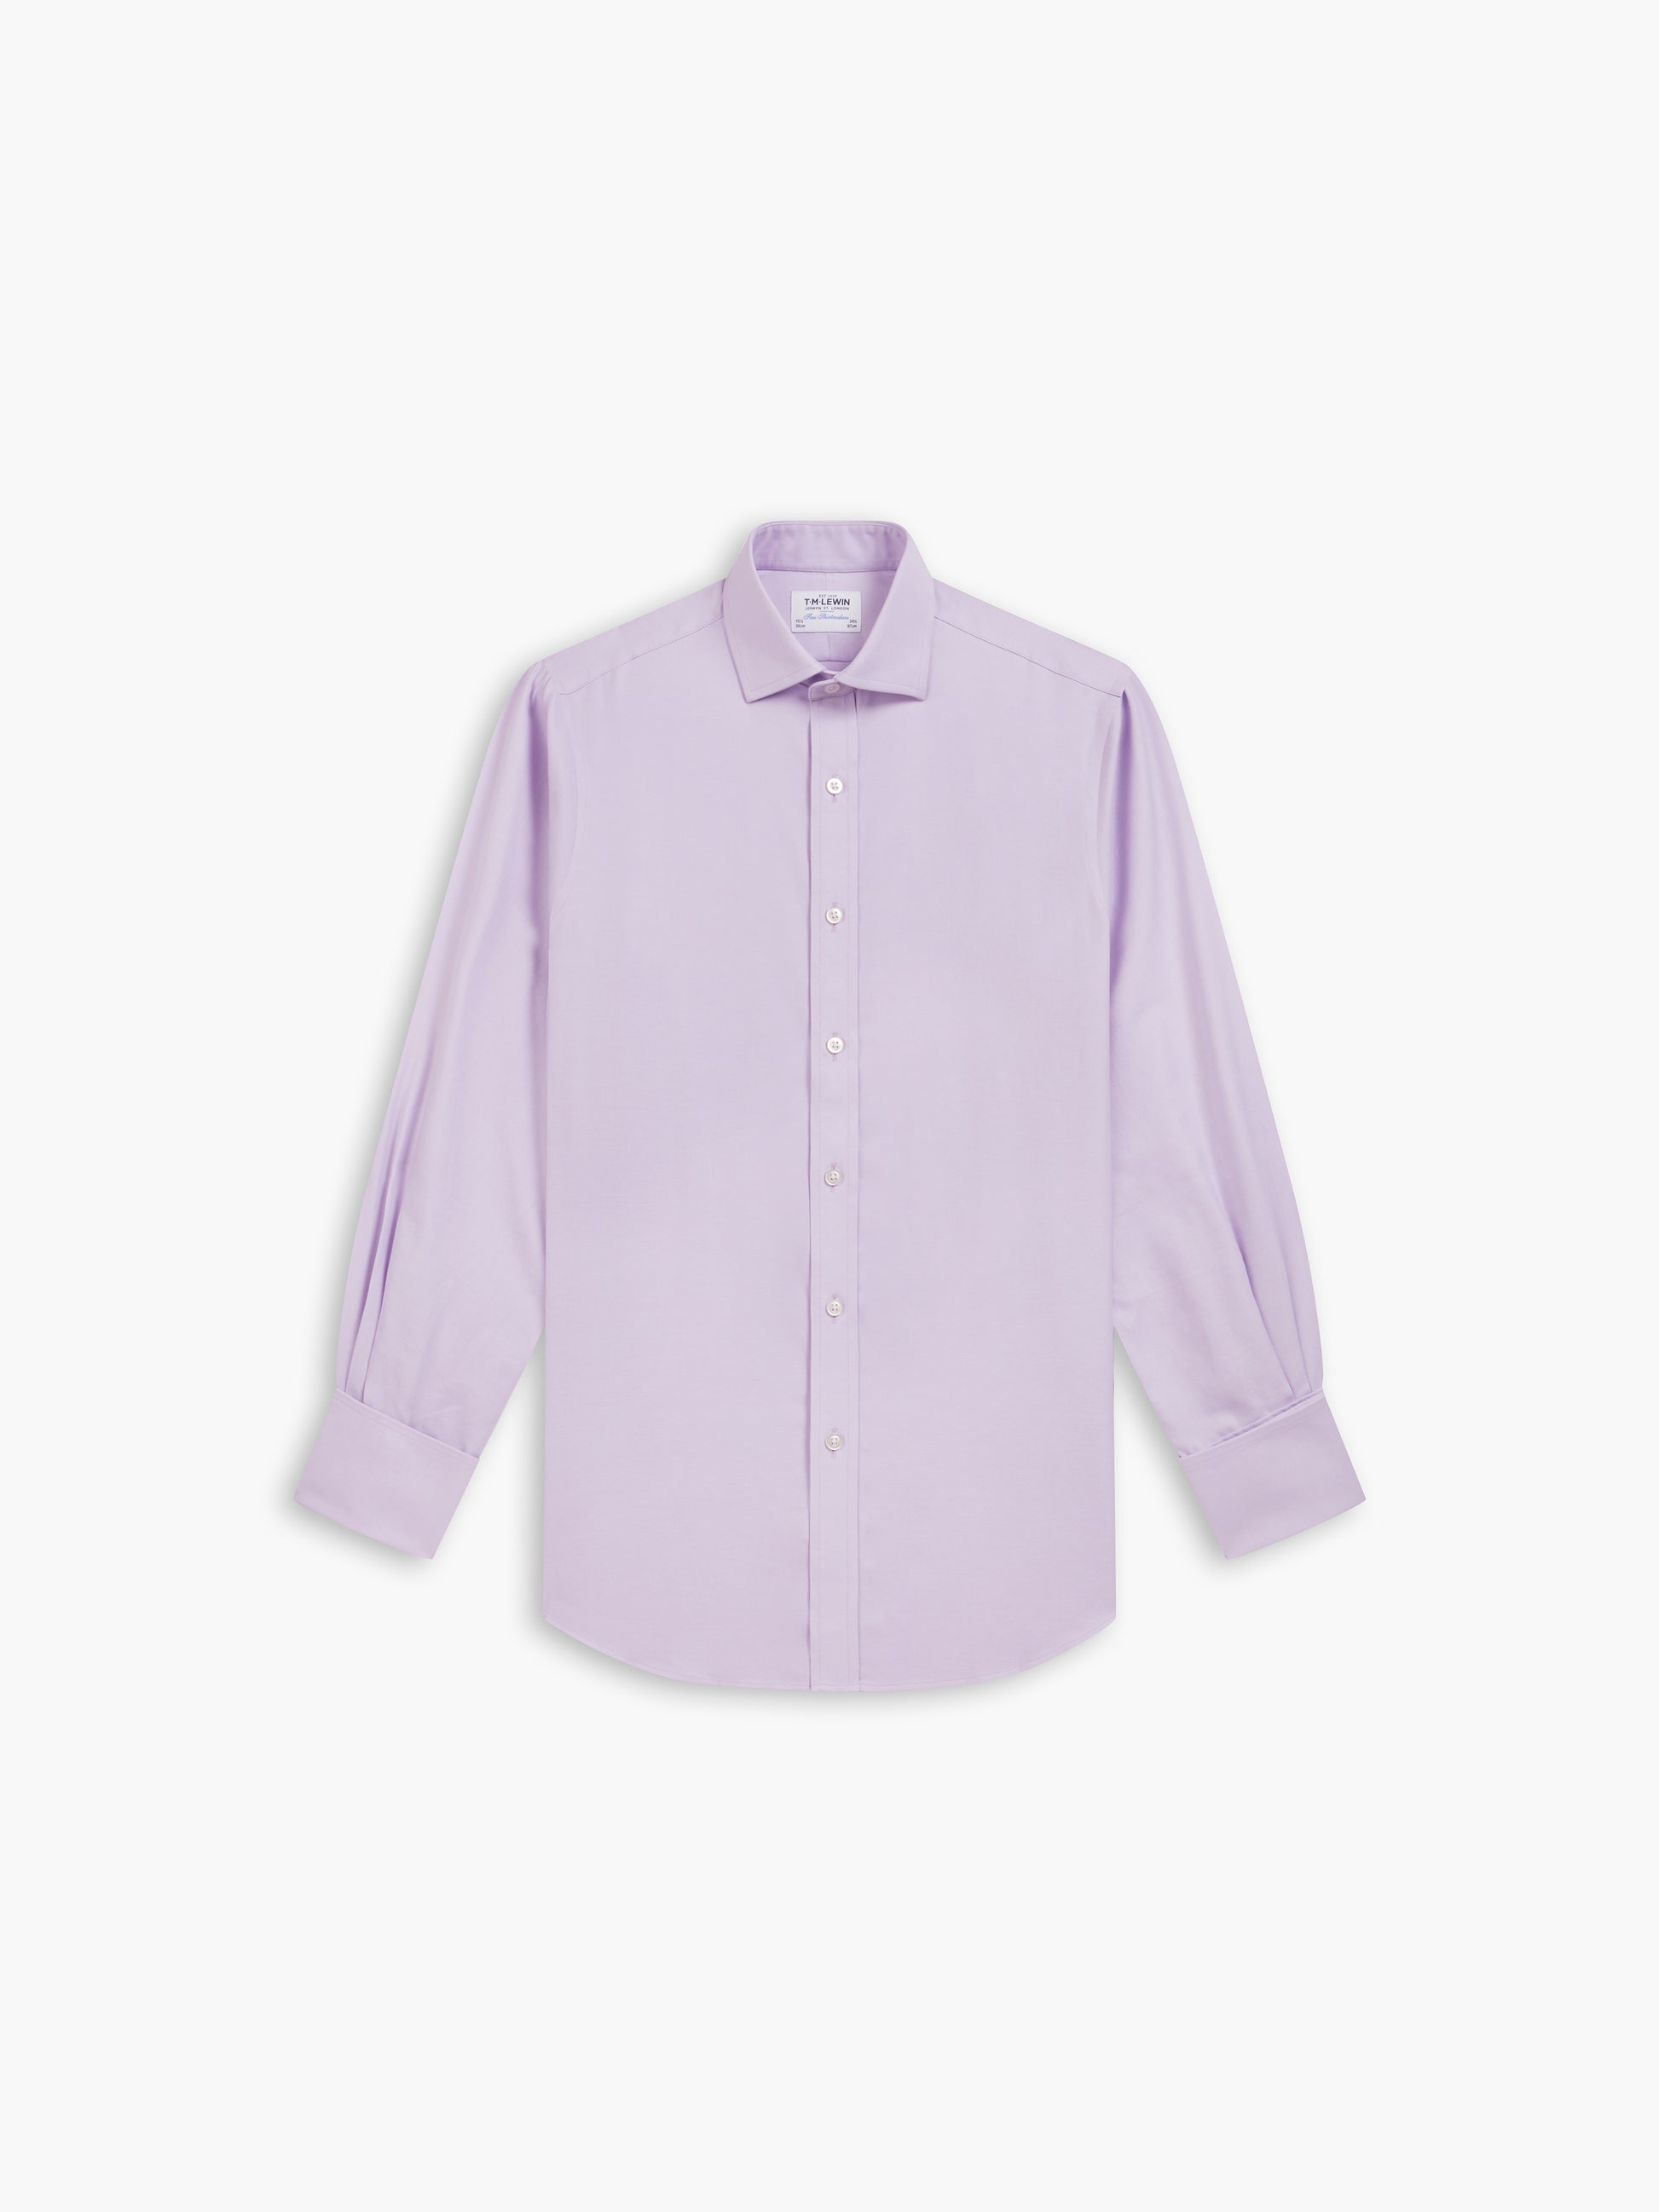 Shirt Non-Iron Slim Collar Fit tmlewinuk Dual Lilac – Twill Classic Cuff